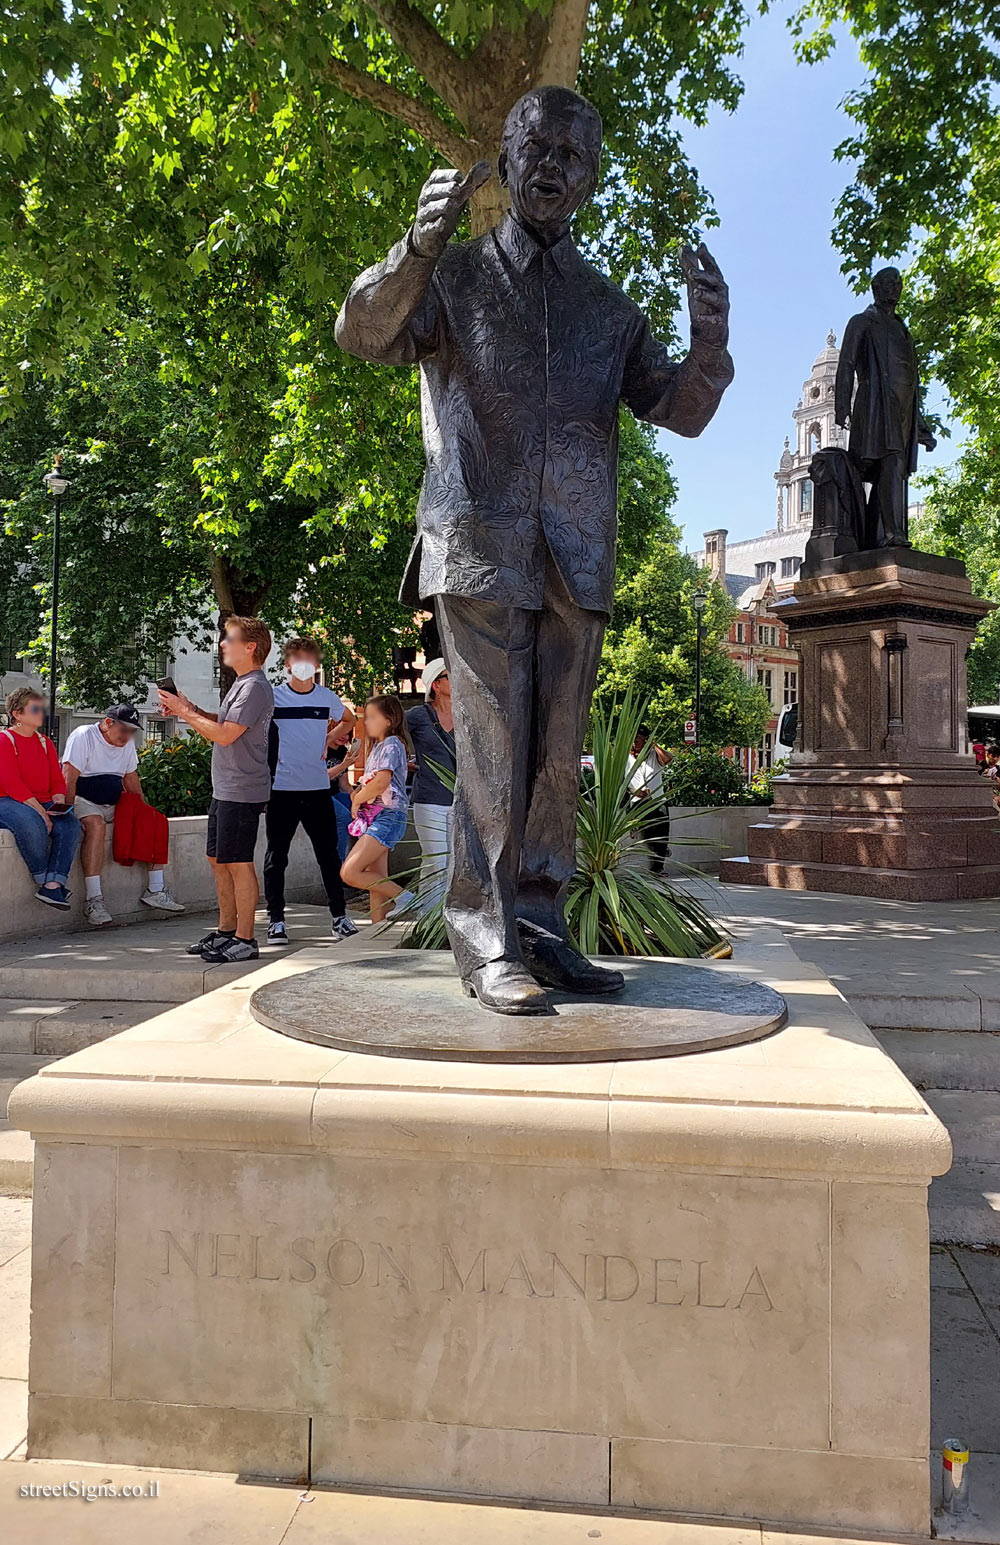 London - Statue of Nelson Mandela - Parliament Square, SW1, London, UK